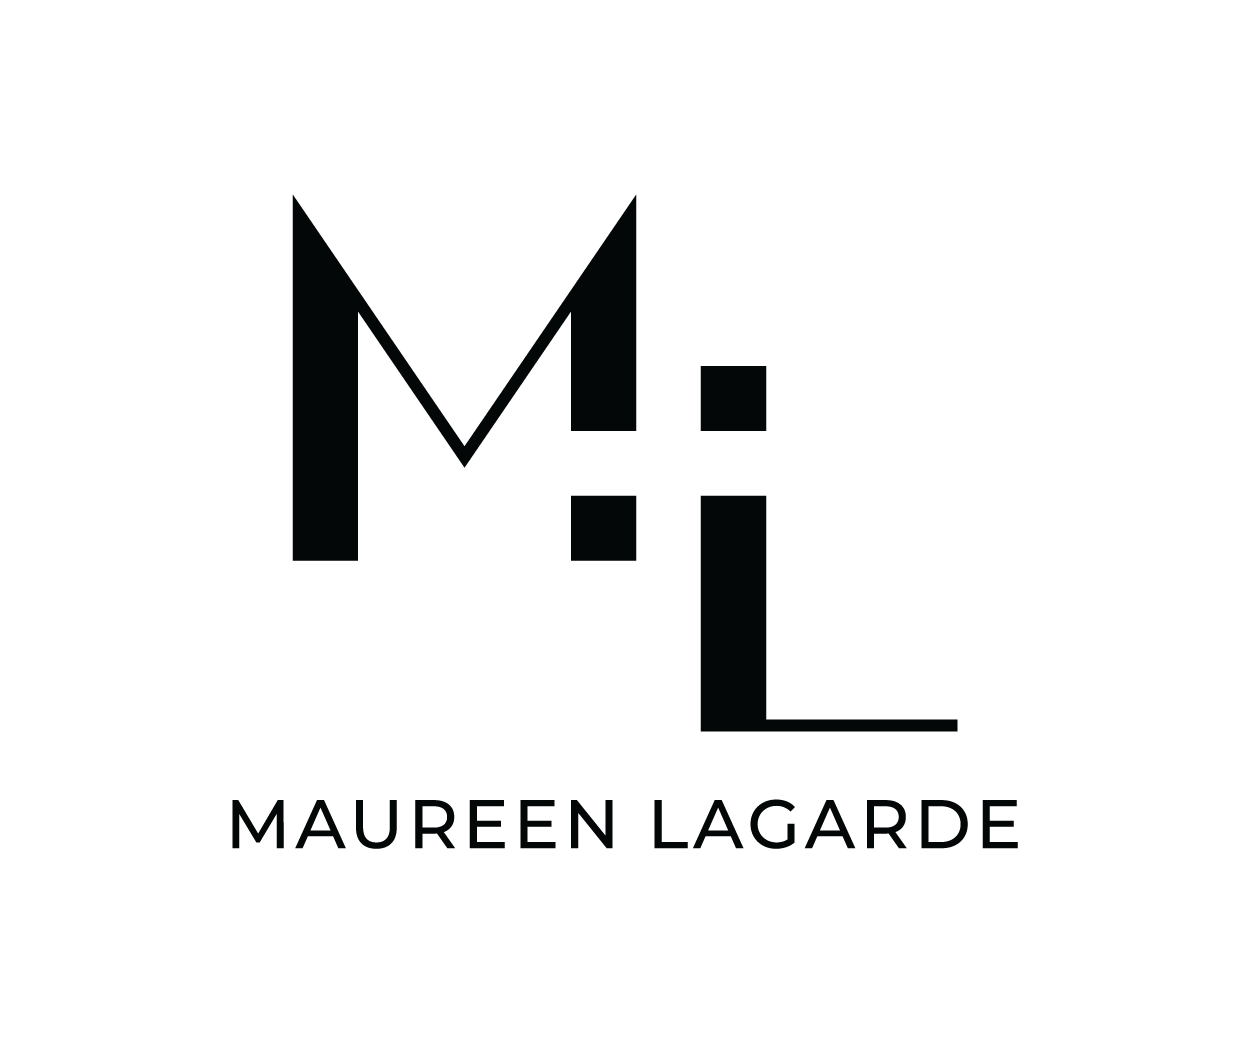 B. Maureen Lagarde - Agente inmobiliario Compass Realty (Nivel 3)